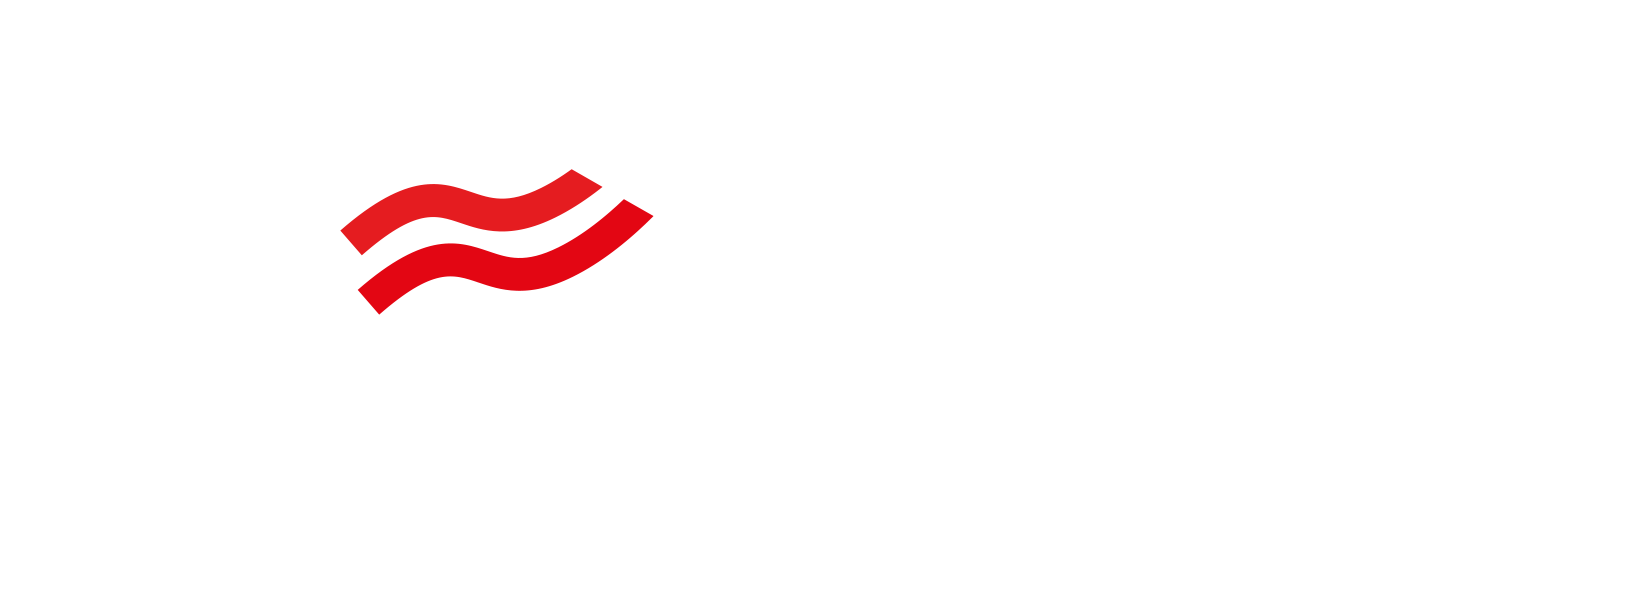 Dartprofi.at-Logo